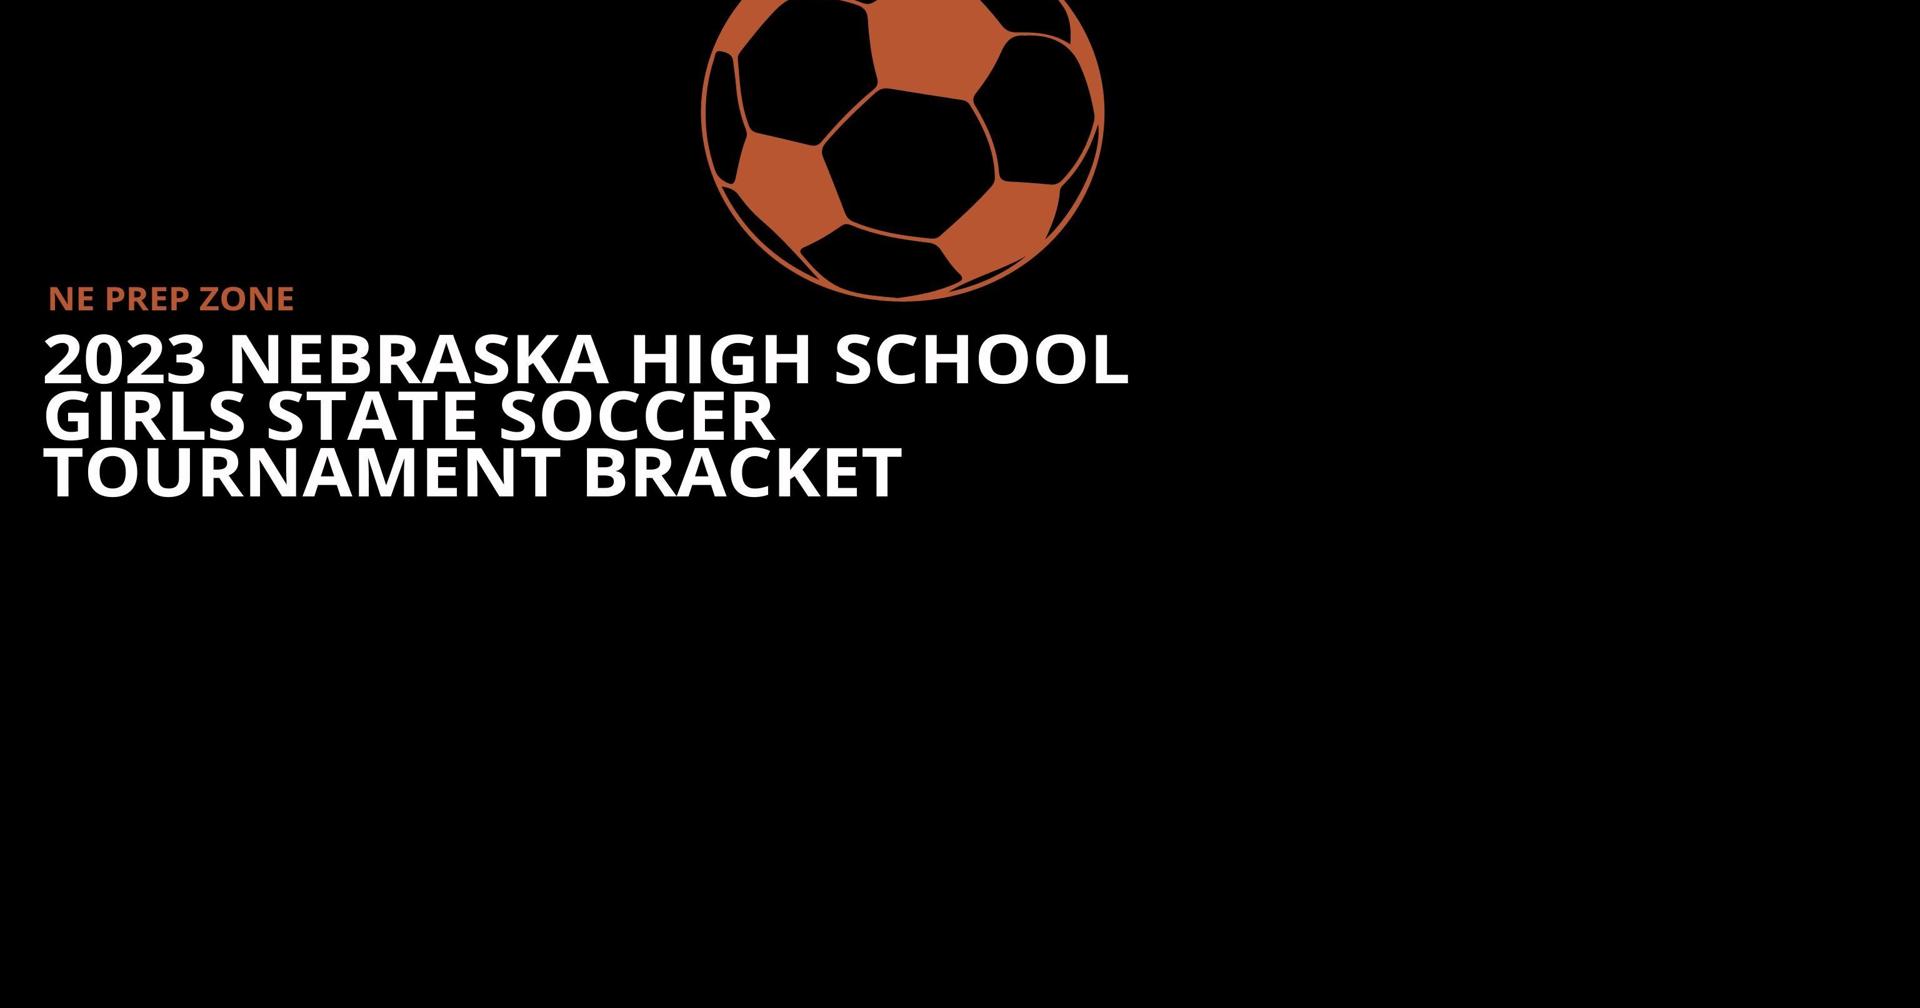 Nebraska high school girls soccer state tournament bracket, May 12